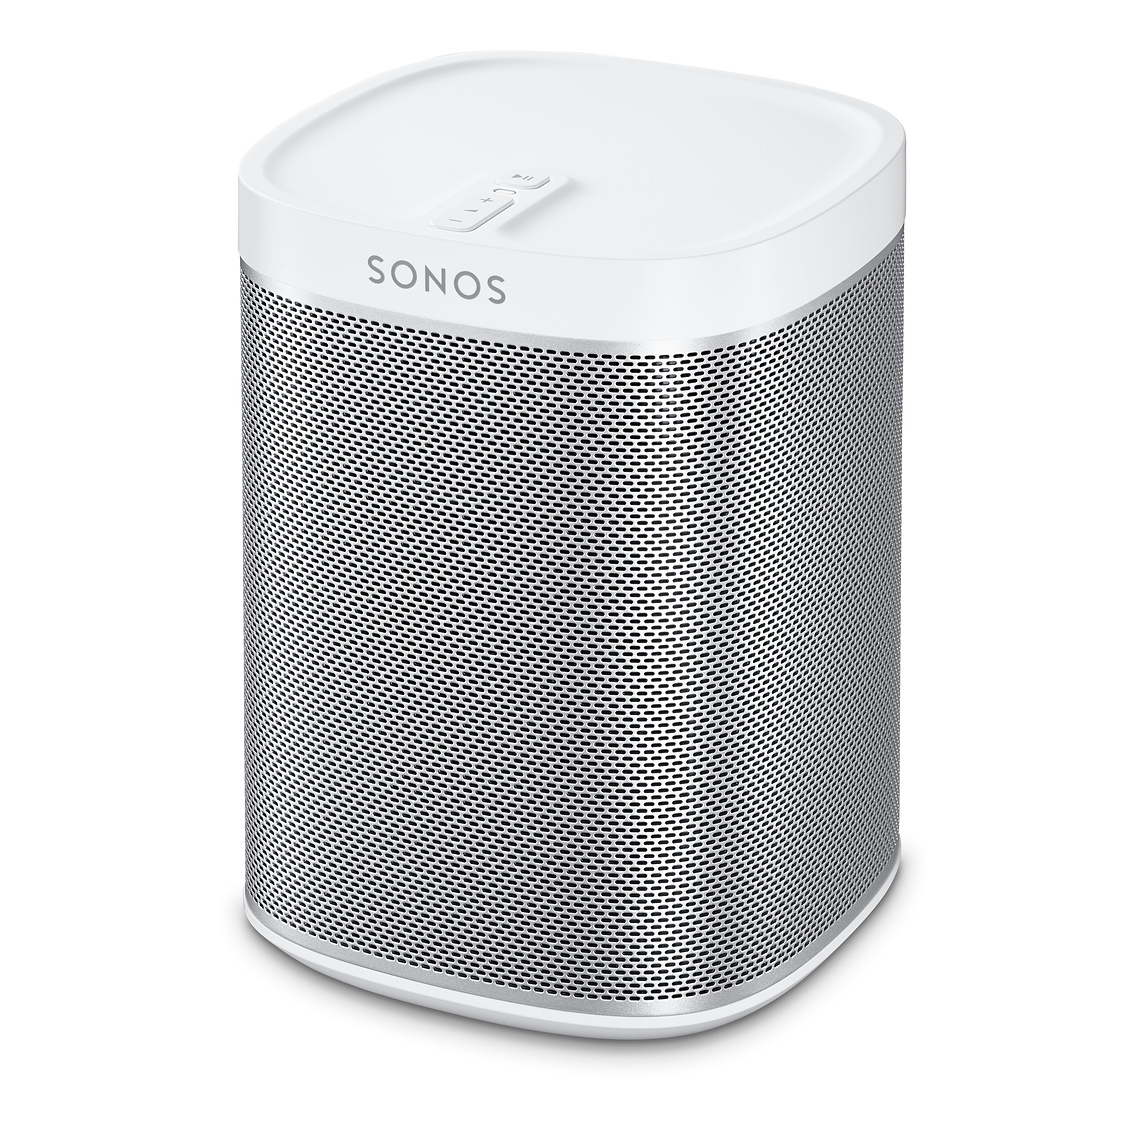 sonos wireless speakers